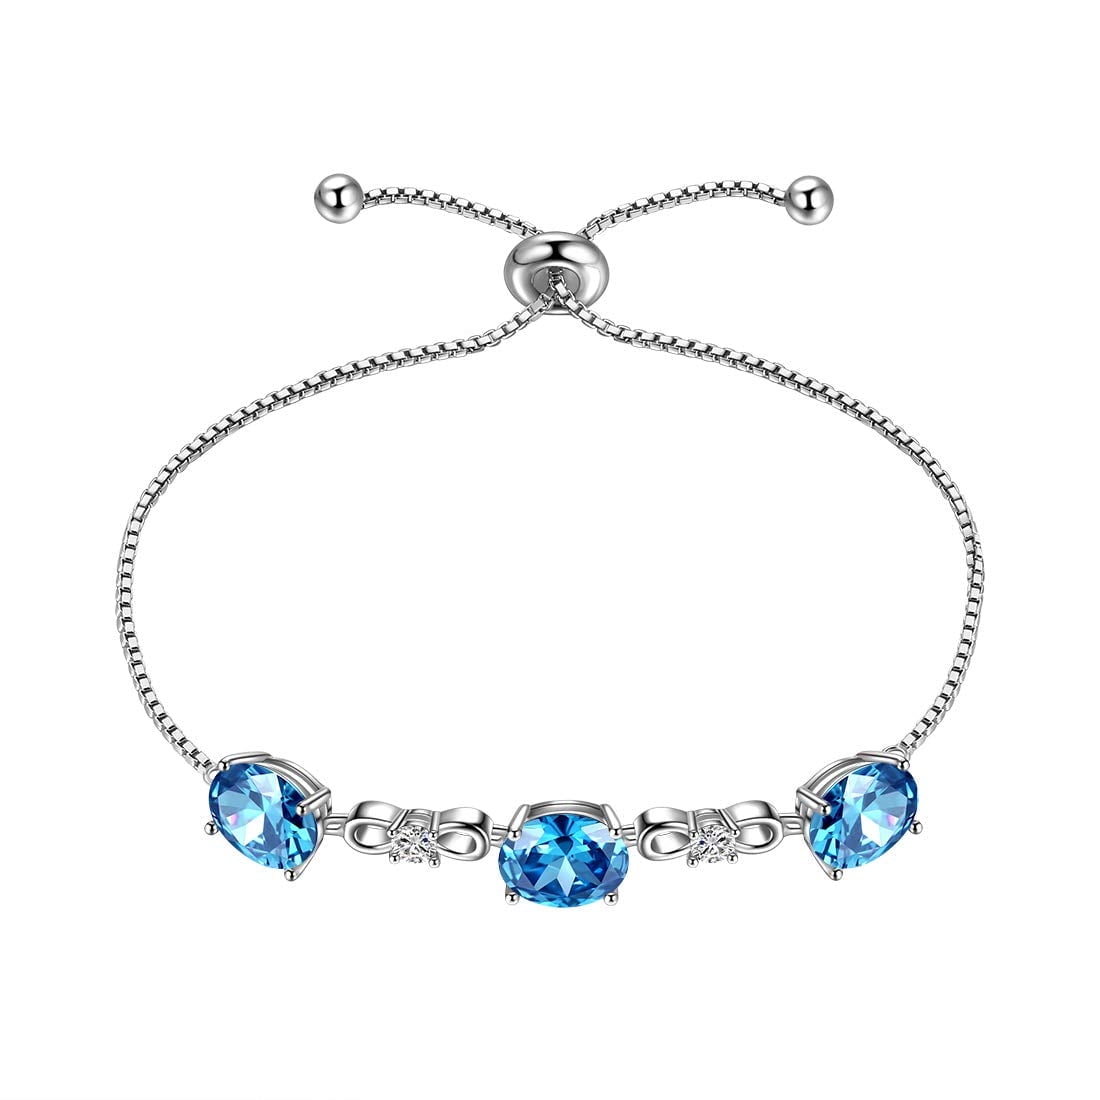 Blue Copper Turquoise, Blue Topaz Gemstone 925 Sterling Silver Charm  Bracelet at Rs 3149/piece | खरे चांदी का कंगन in Jaipur | ID: 2852720909533